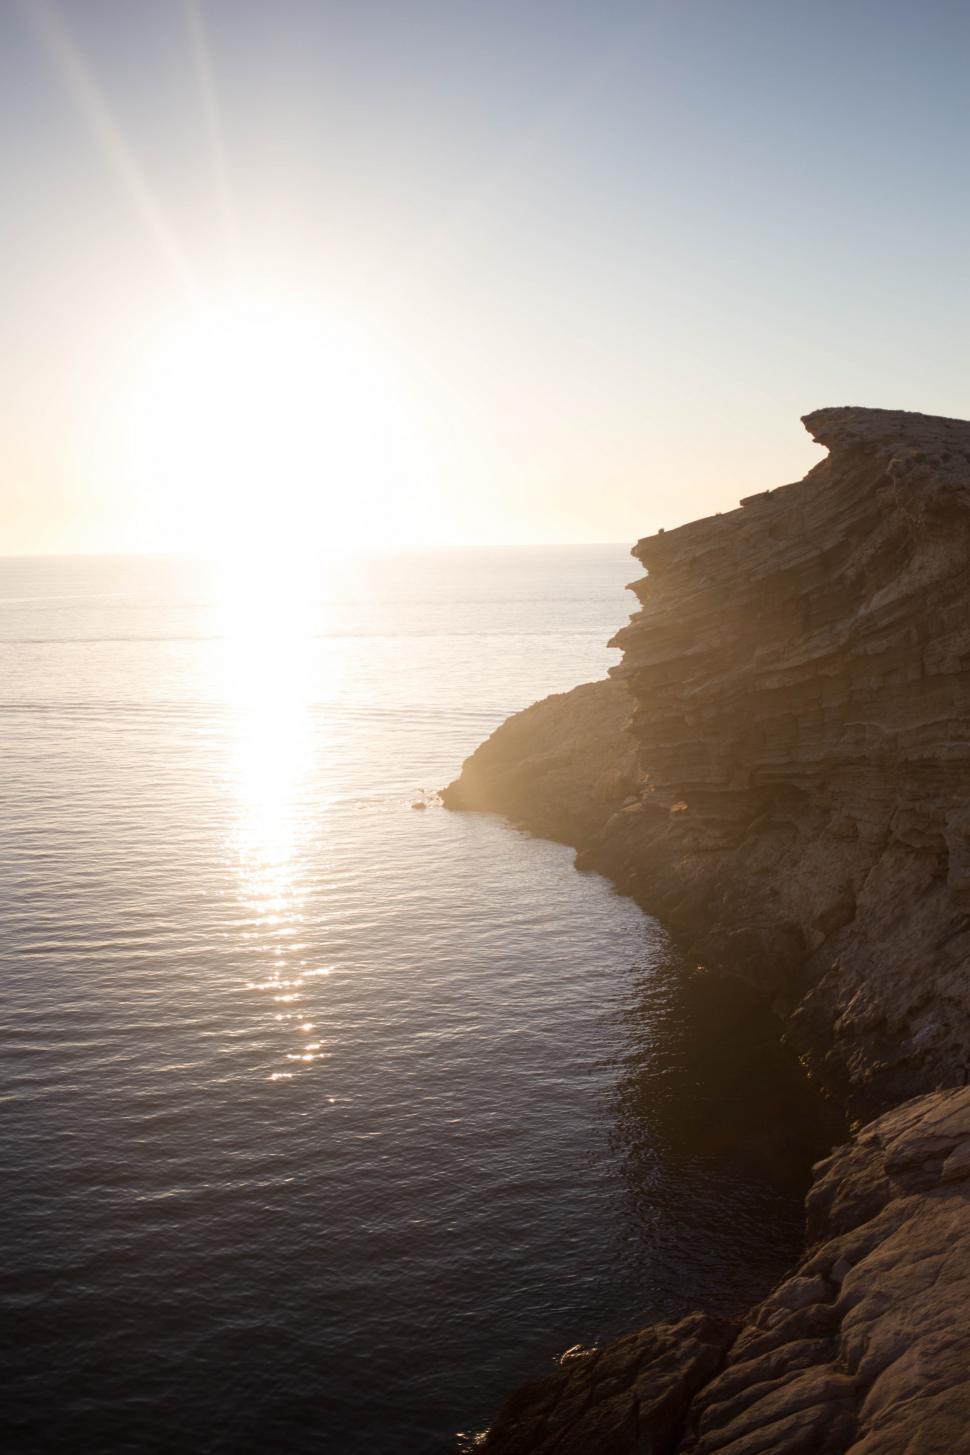 Free Image of A rocky seashore at sunset 